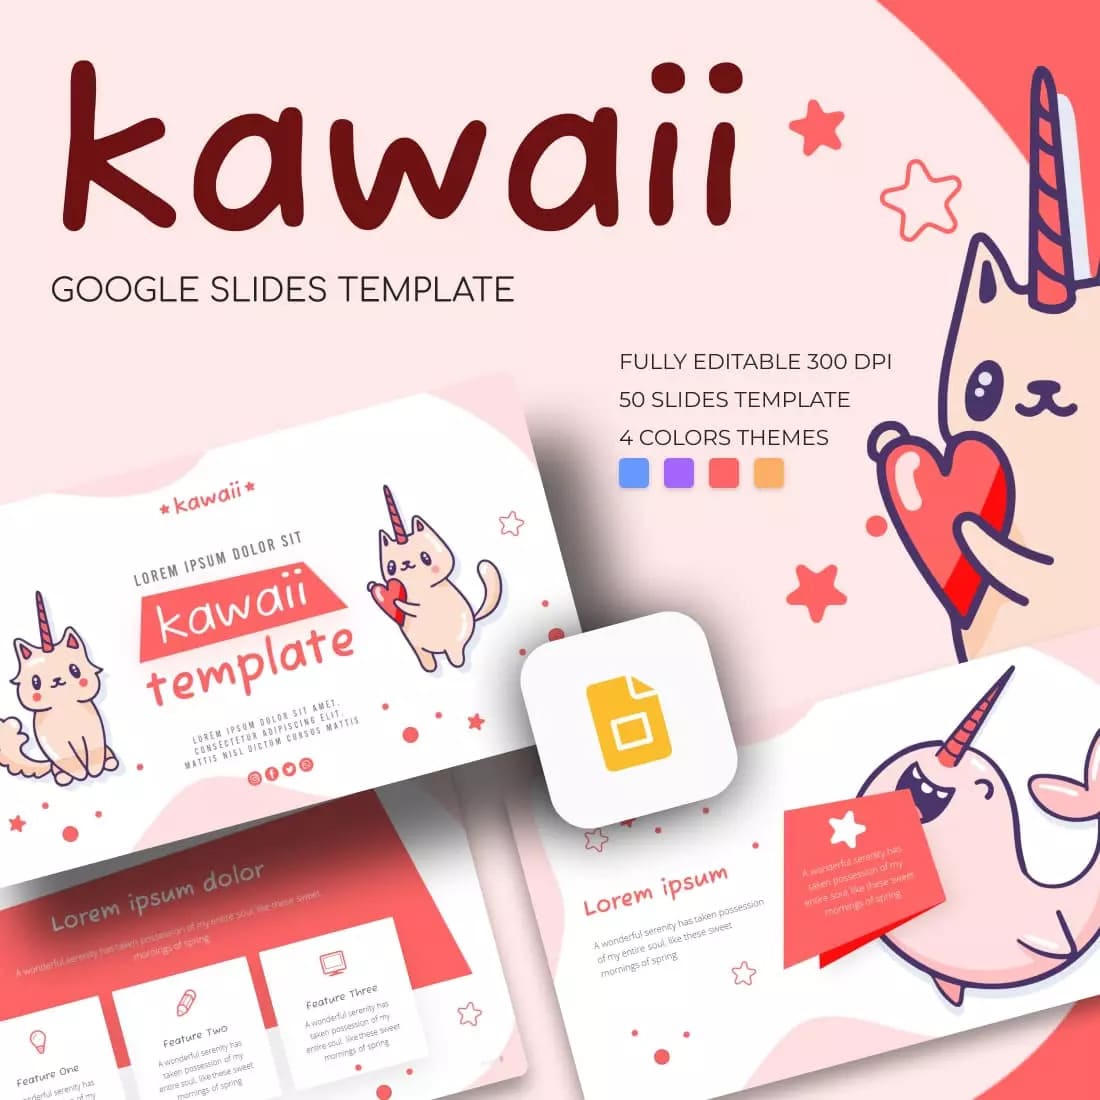 Kawaii Google Slides Template Preview 7.